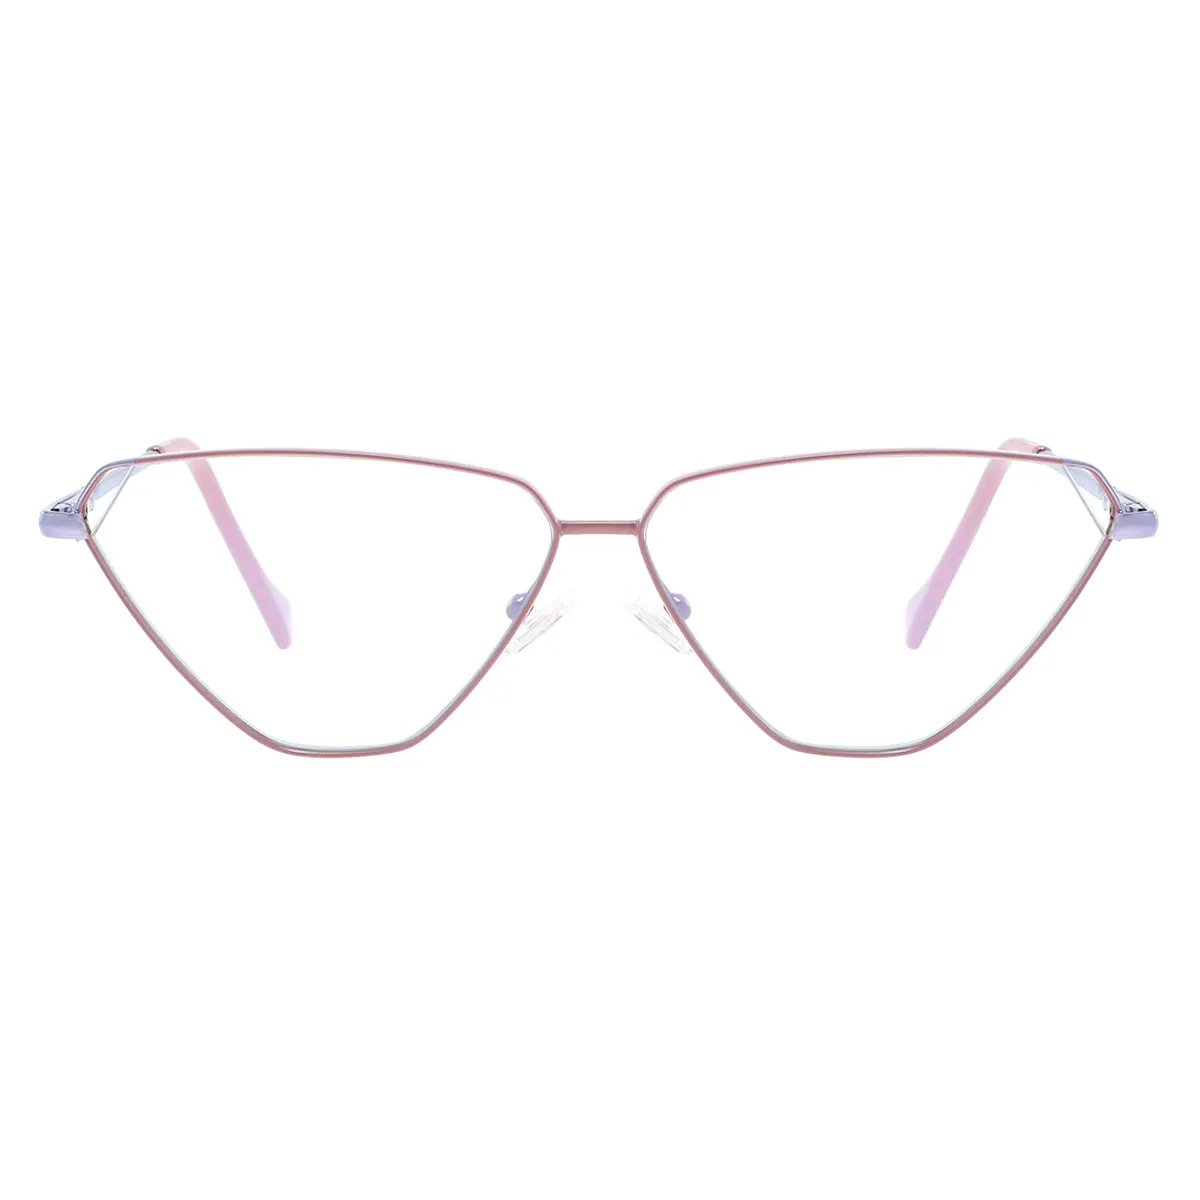 Fashion Cat-eye Blue  Reading Glasses for Women